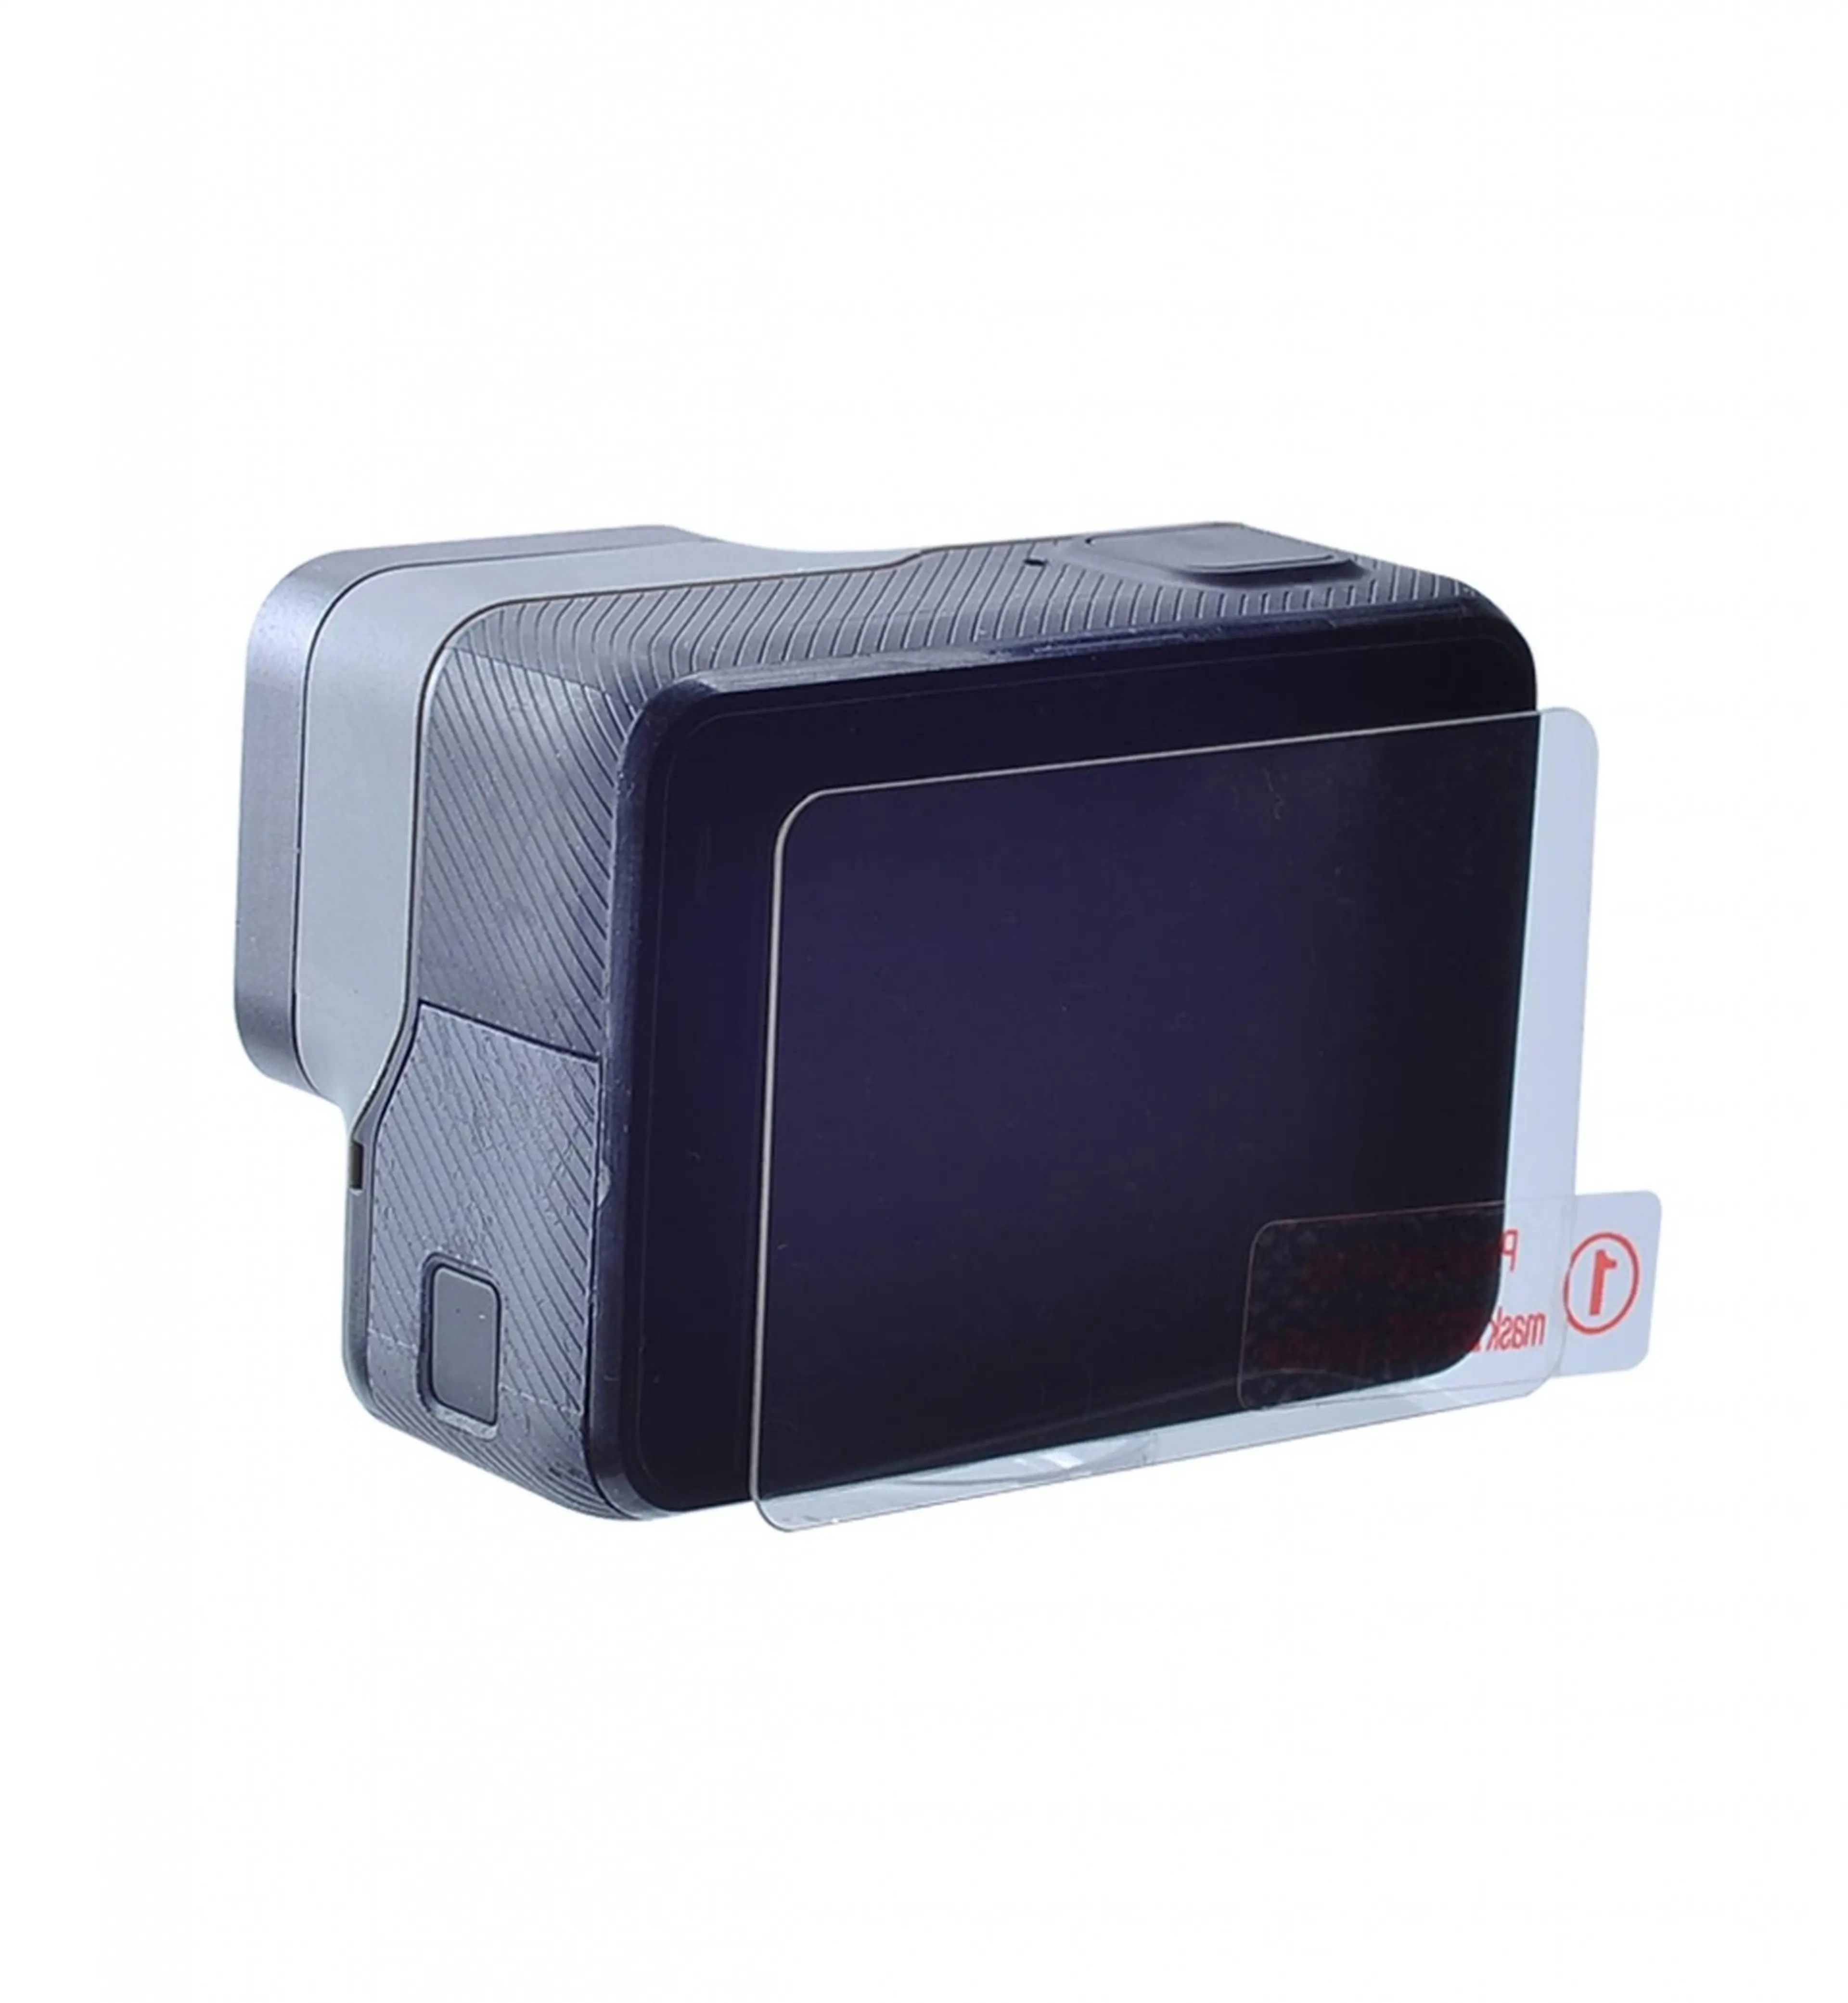 1. Folie sticla protectie ecran lcd camera GoPro Hero 5, 6, 7 - Tempered glass